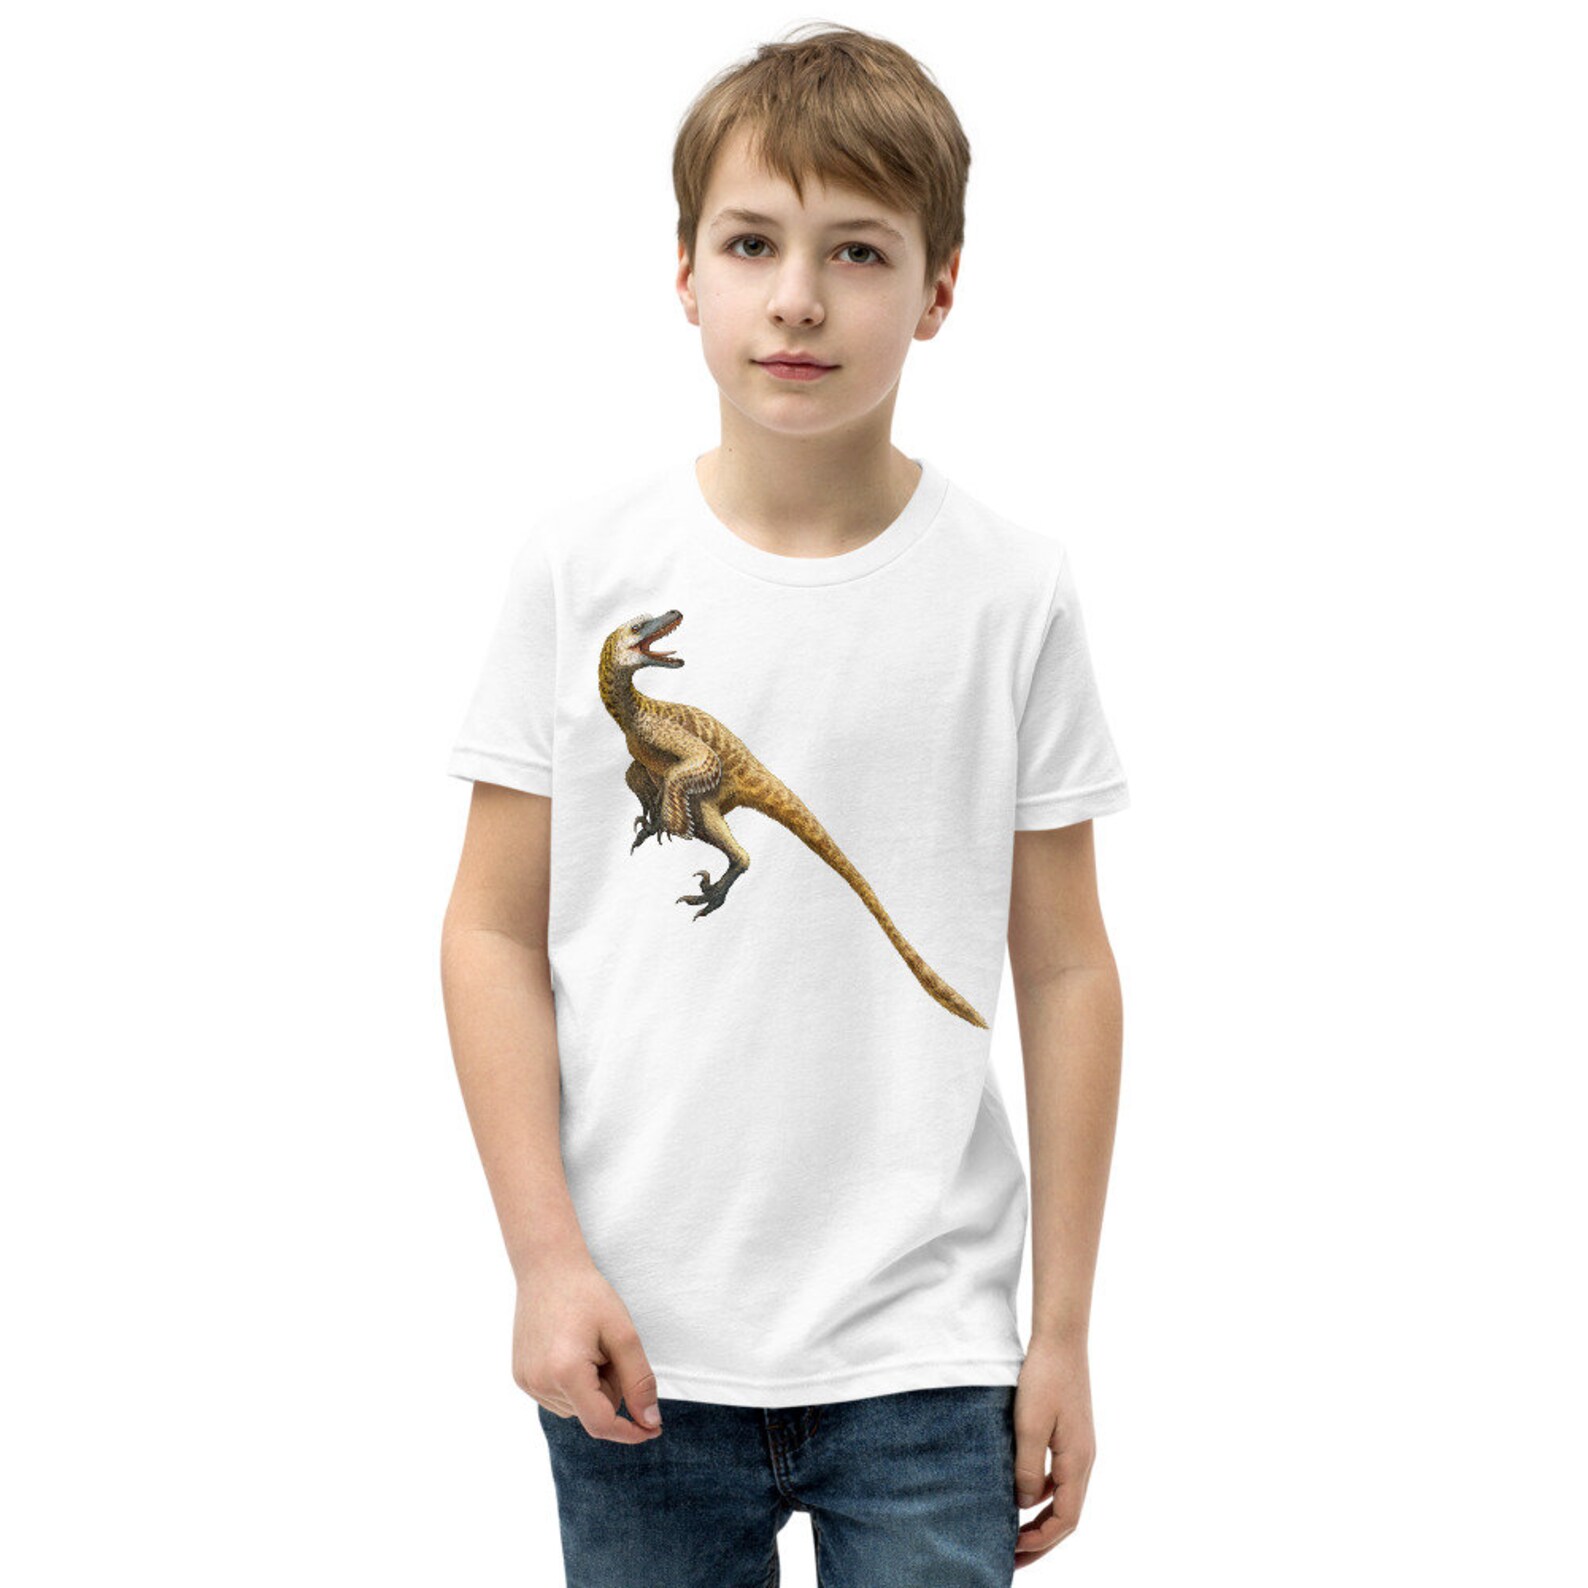 Dinosaur Shirt Kids Dinosaur Shirt Boys Dinosaur Shirt | Etsy